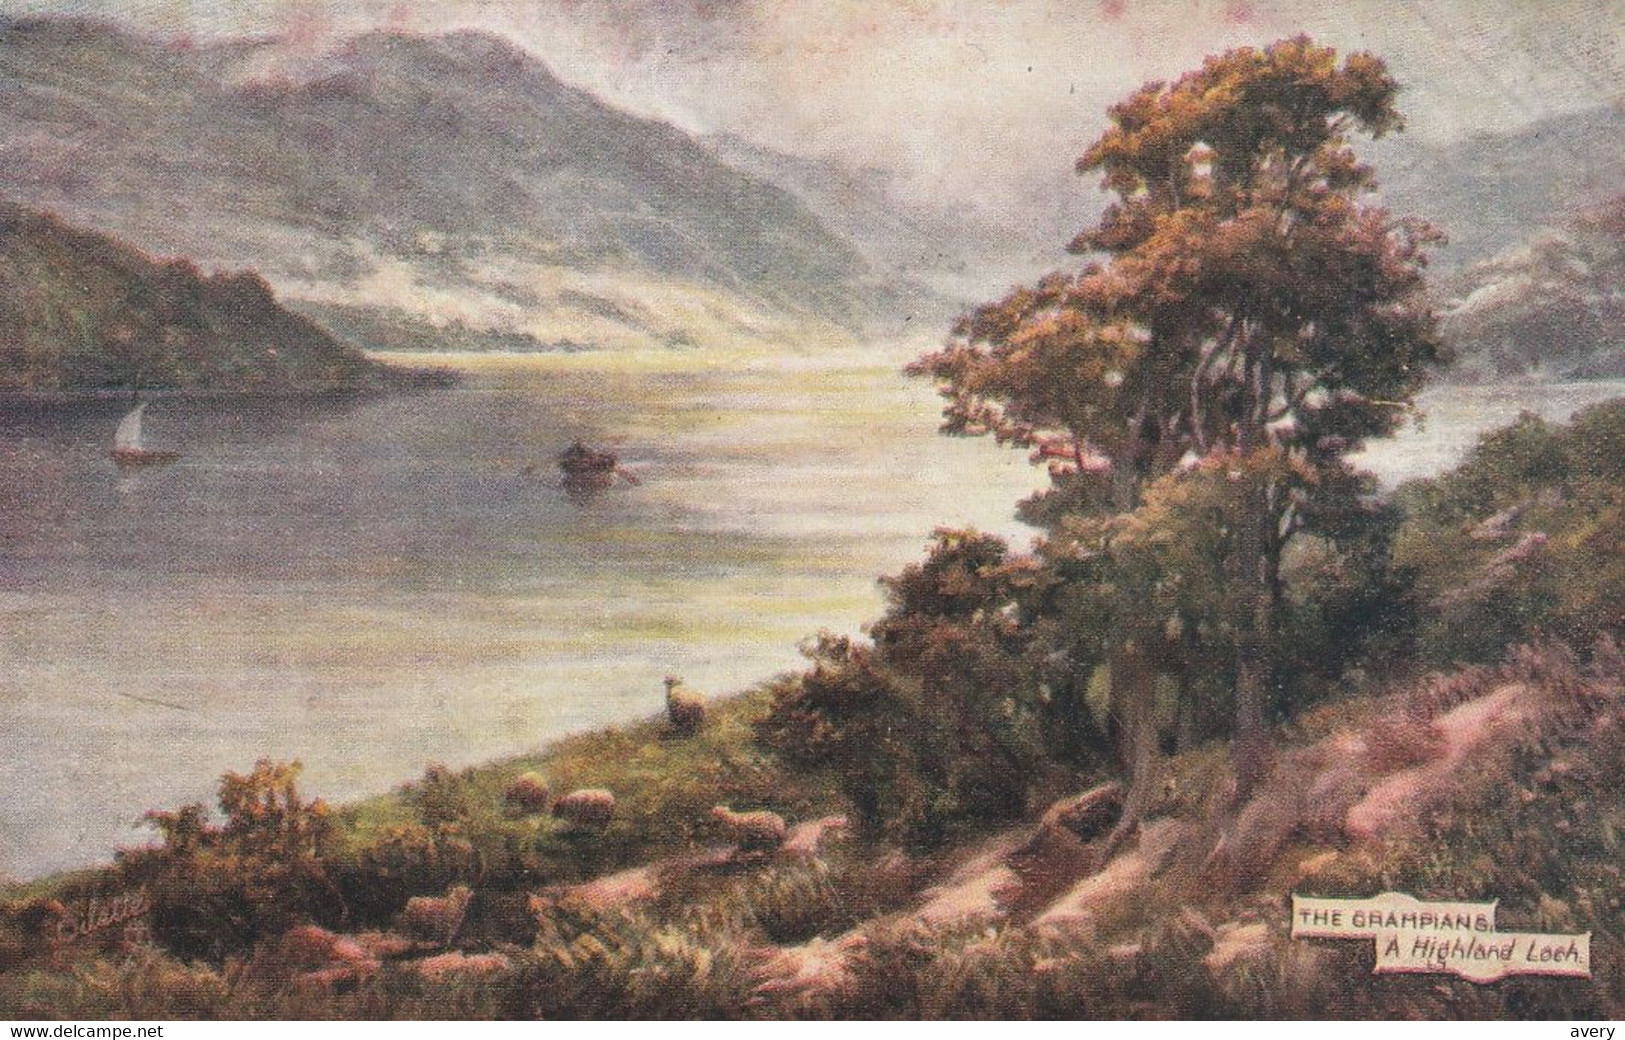 Raphael Tuck & Sons' "Oilette" The Grampians  A Highland Loch - Pittura & Quadri